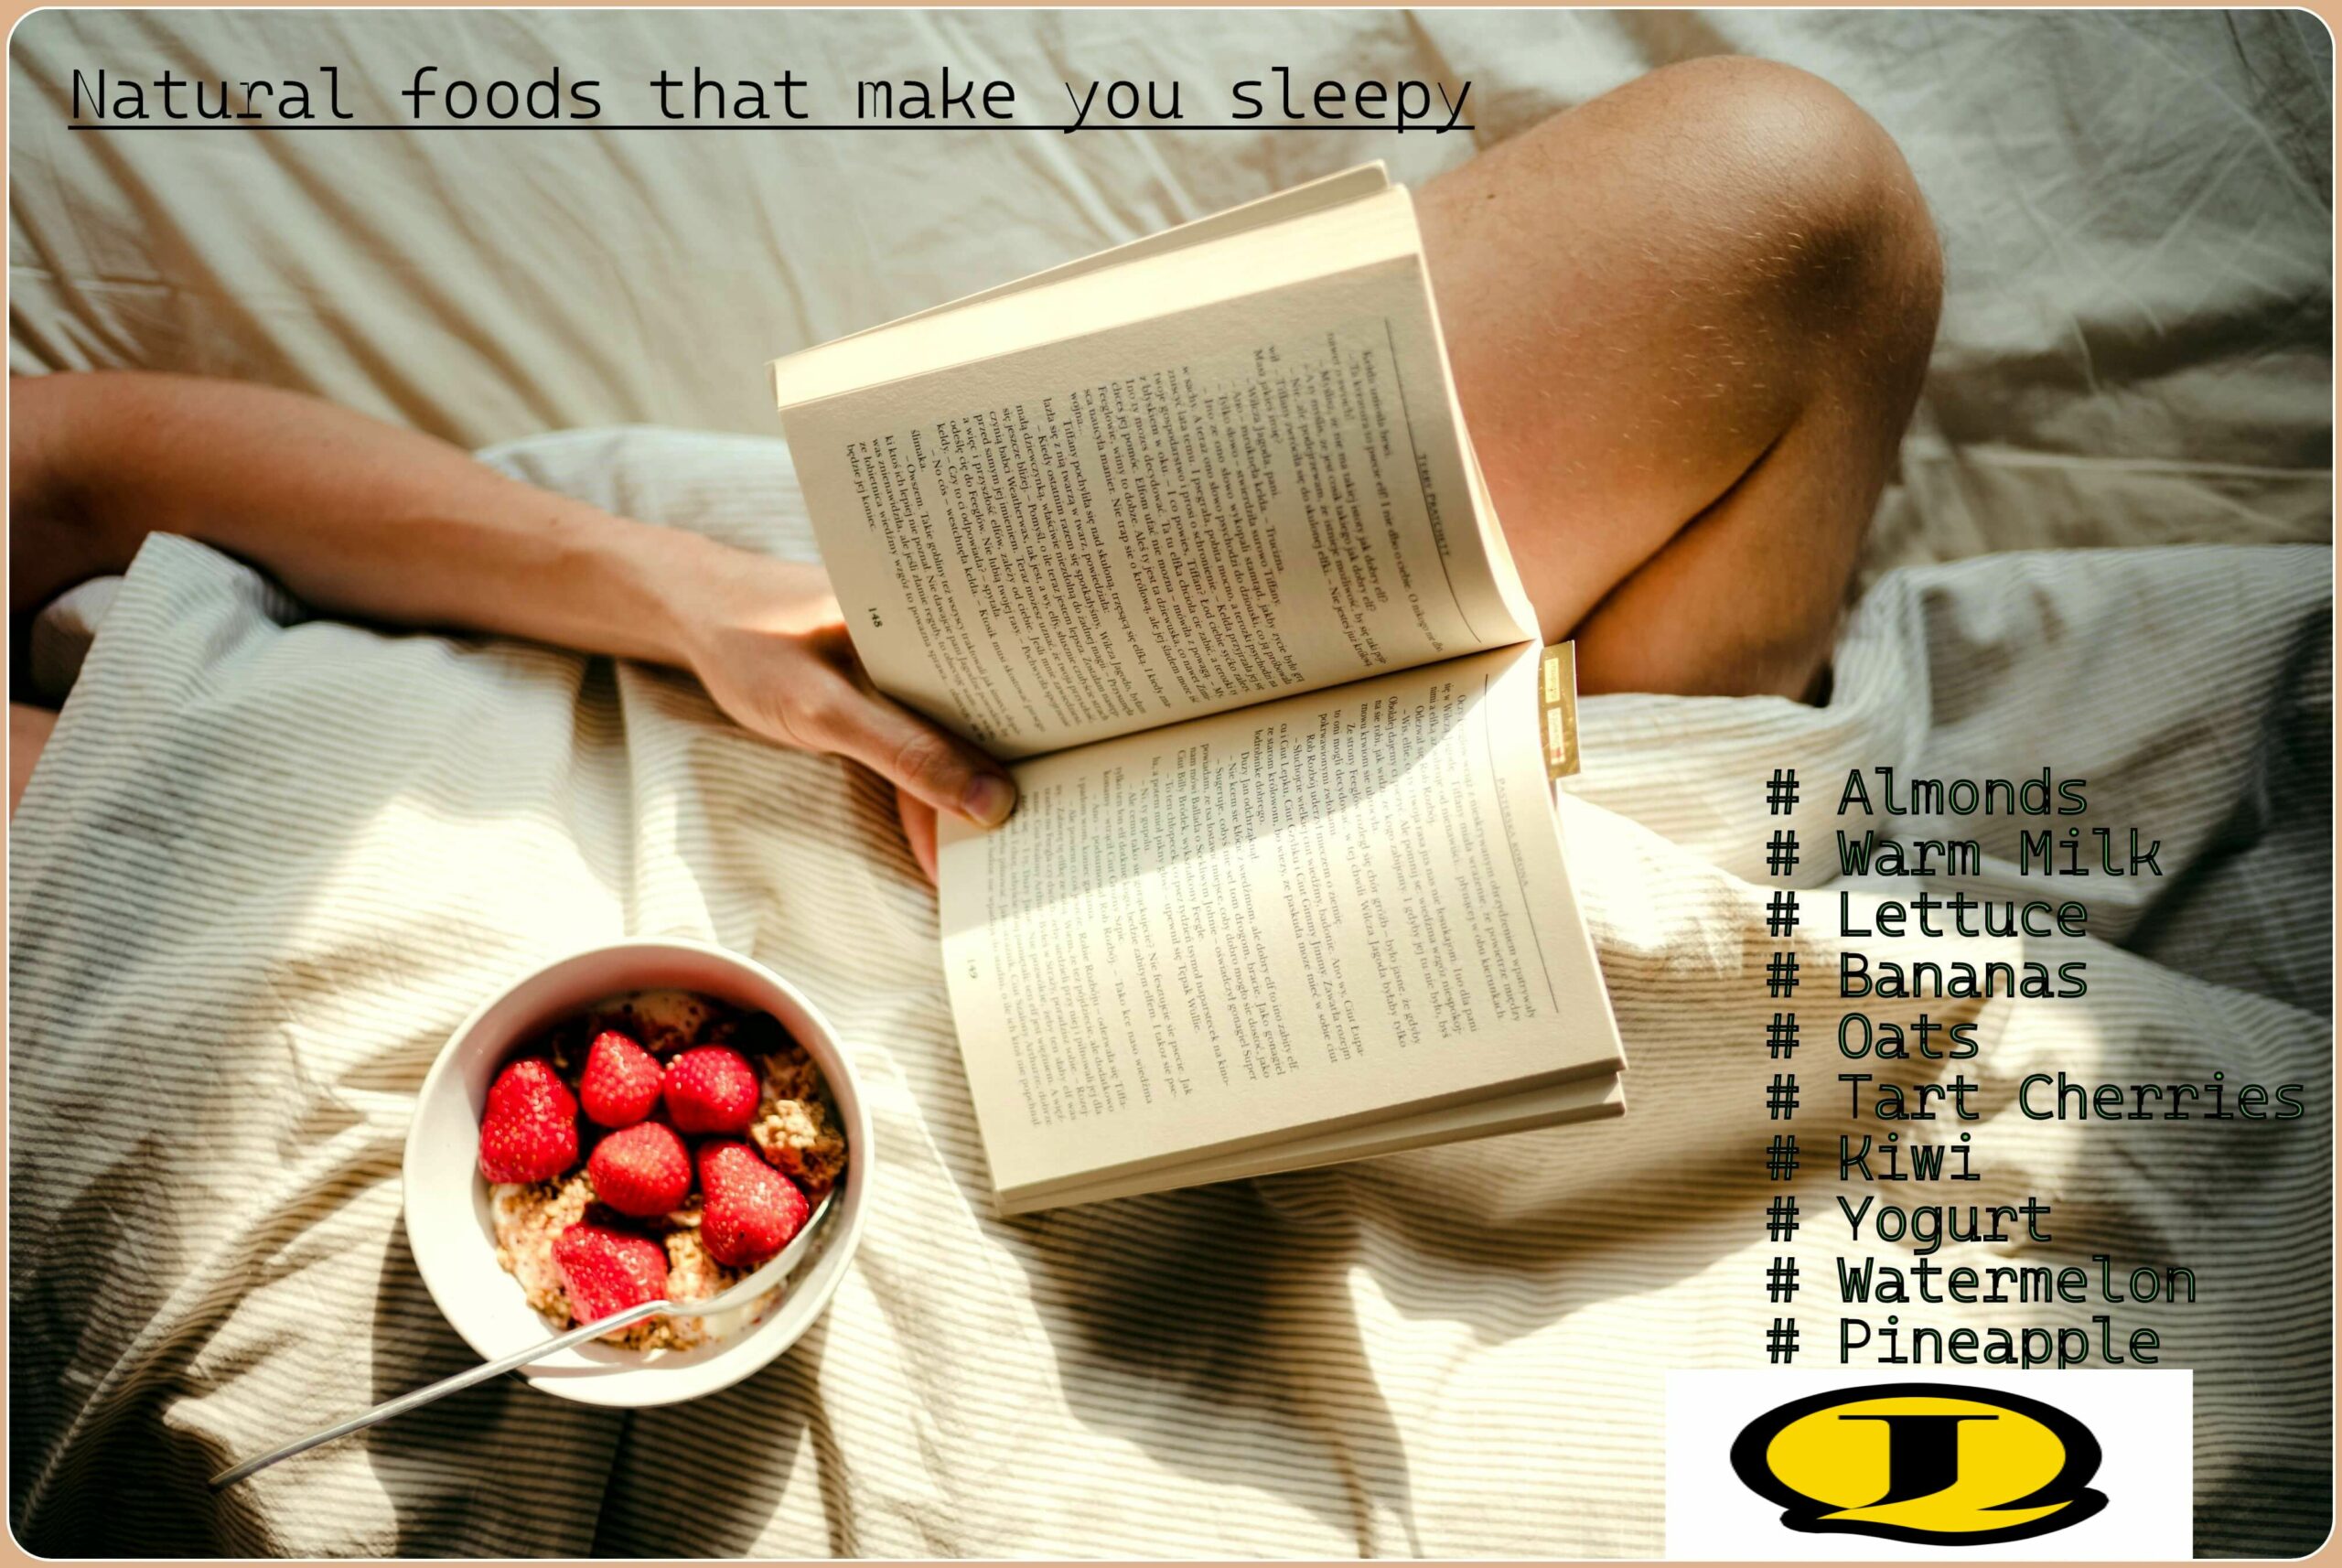 Natural foods that make you sleepy